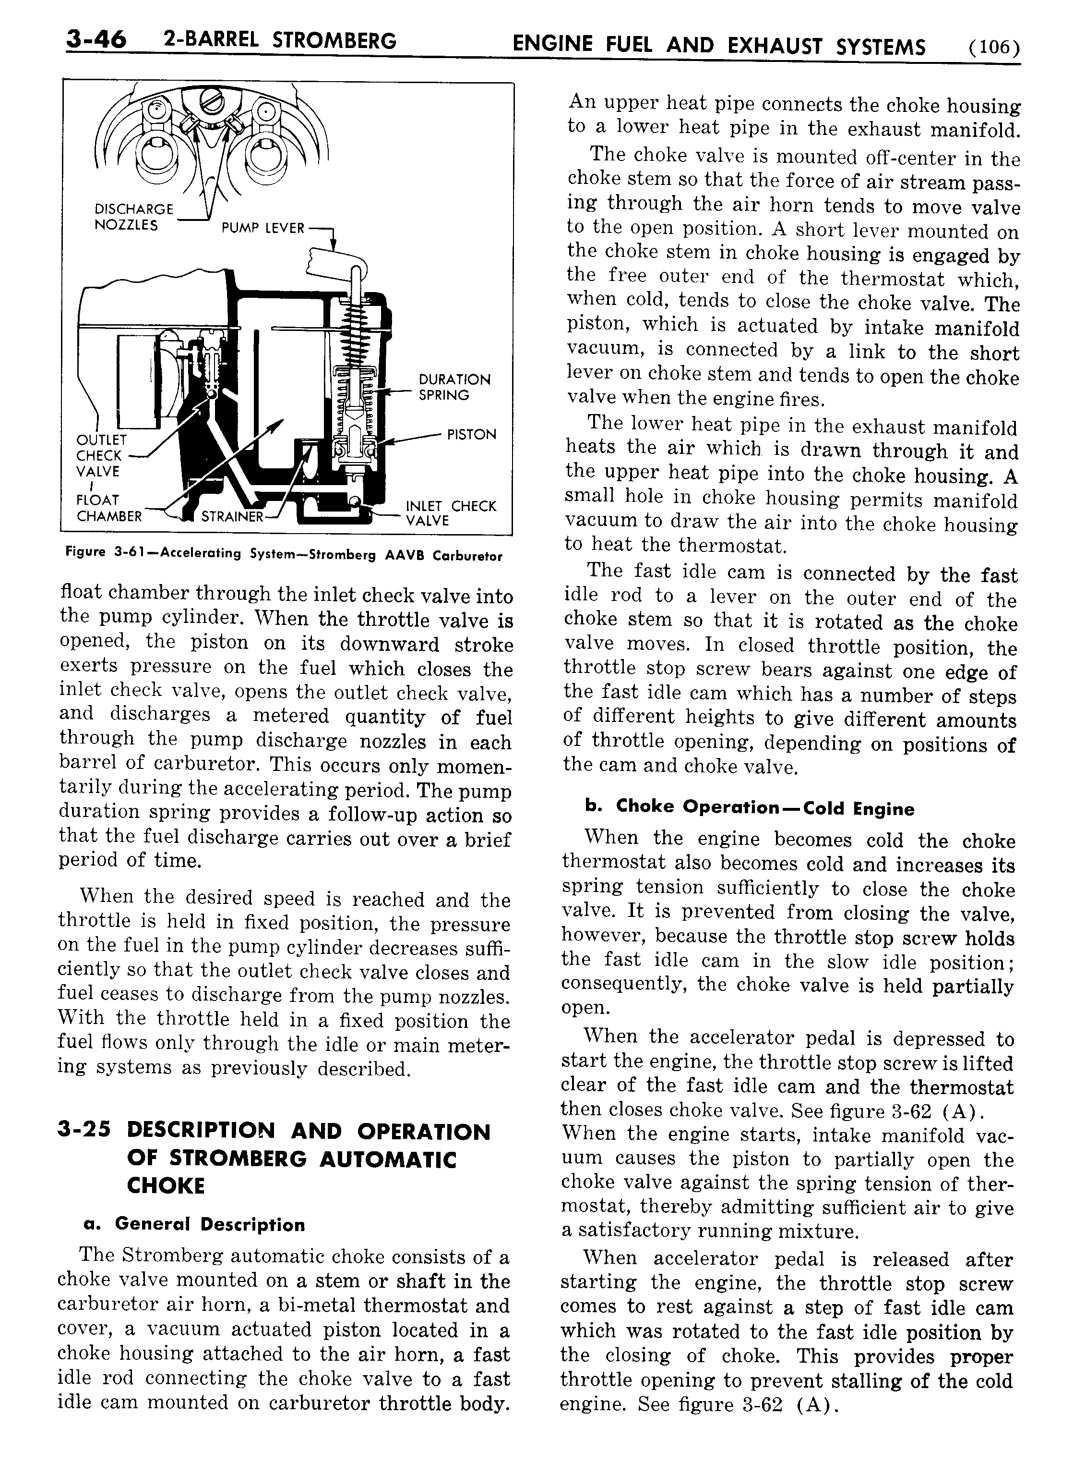 n_04 1954 Buick Shop Manual - Engine Fuel & Exhaust-046-046.jpg